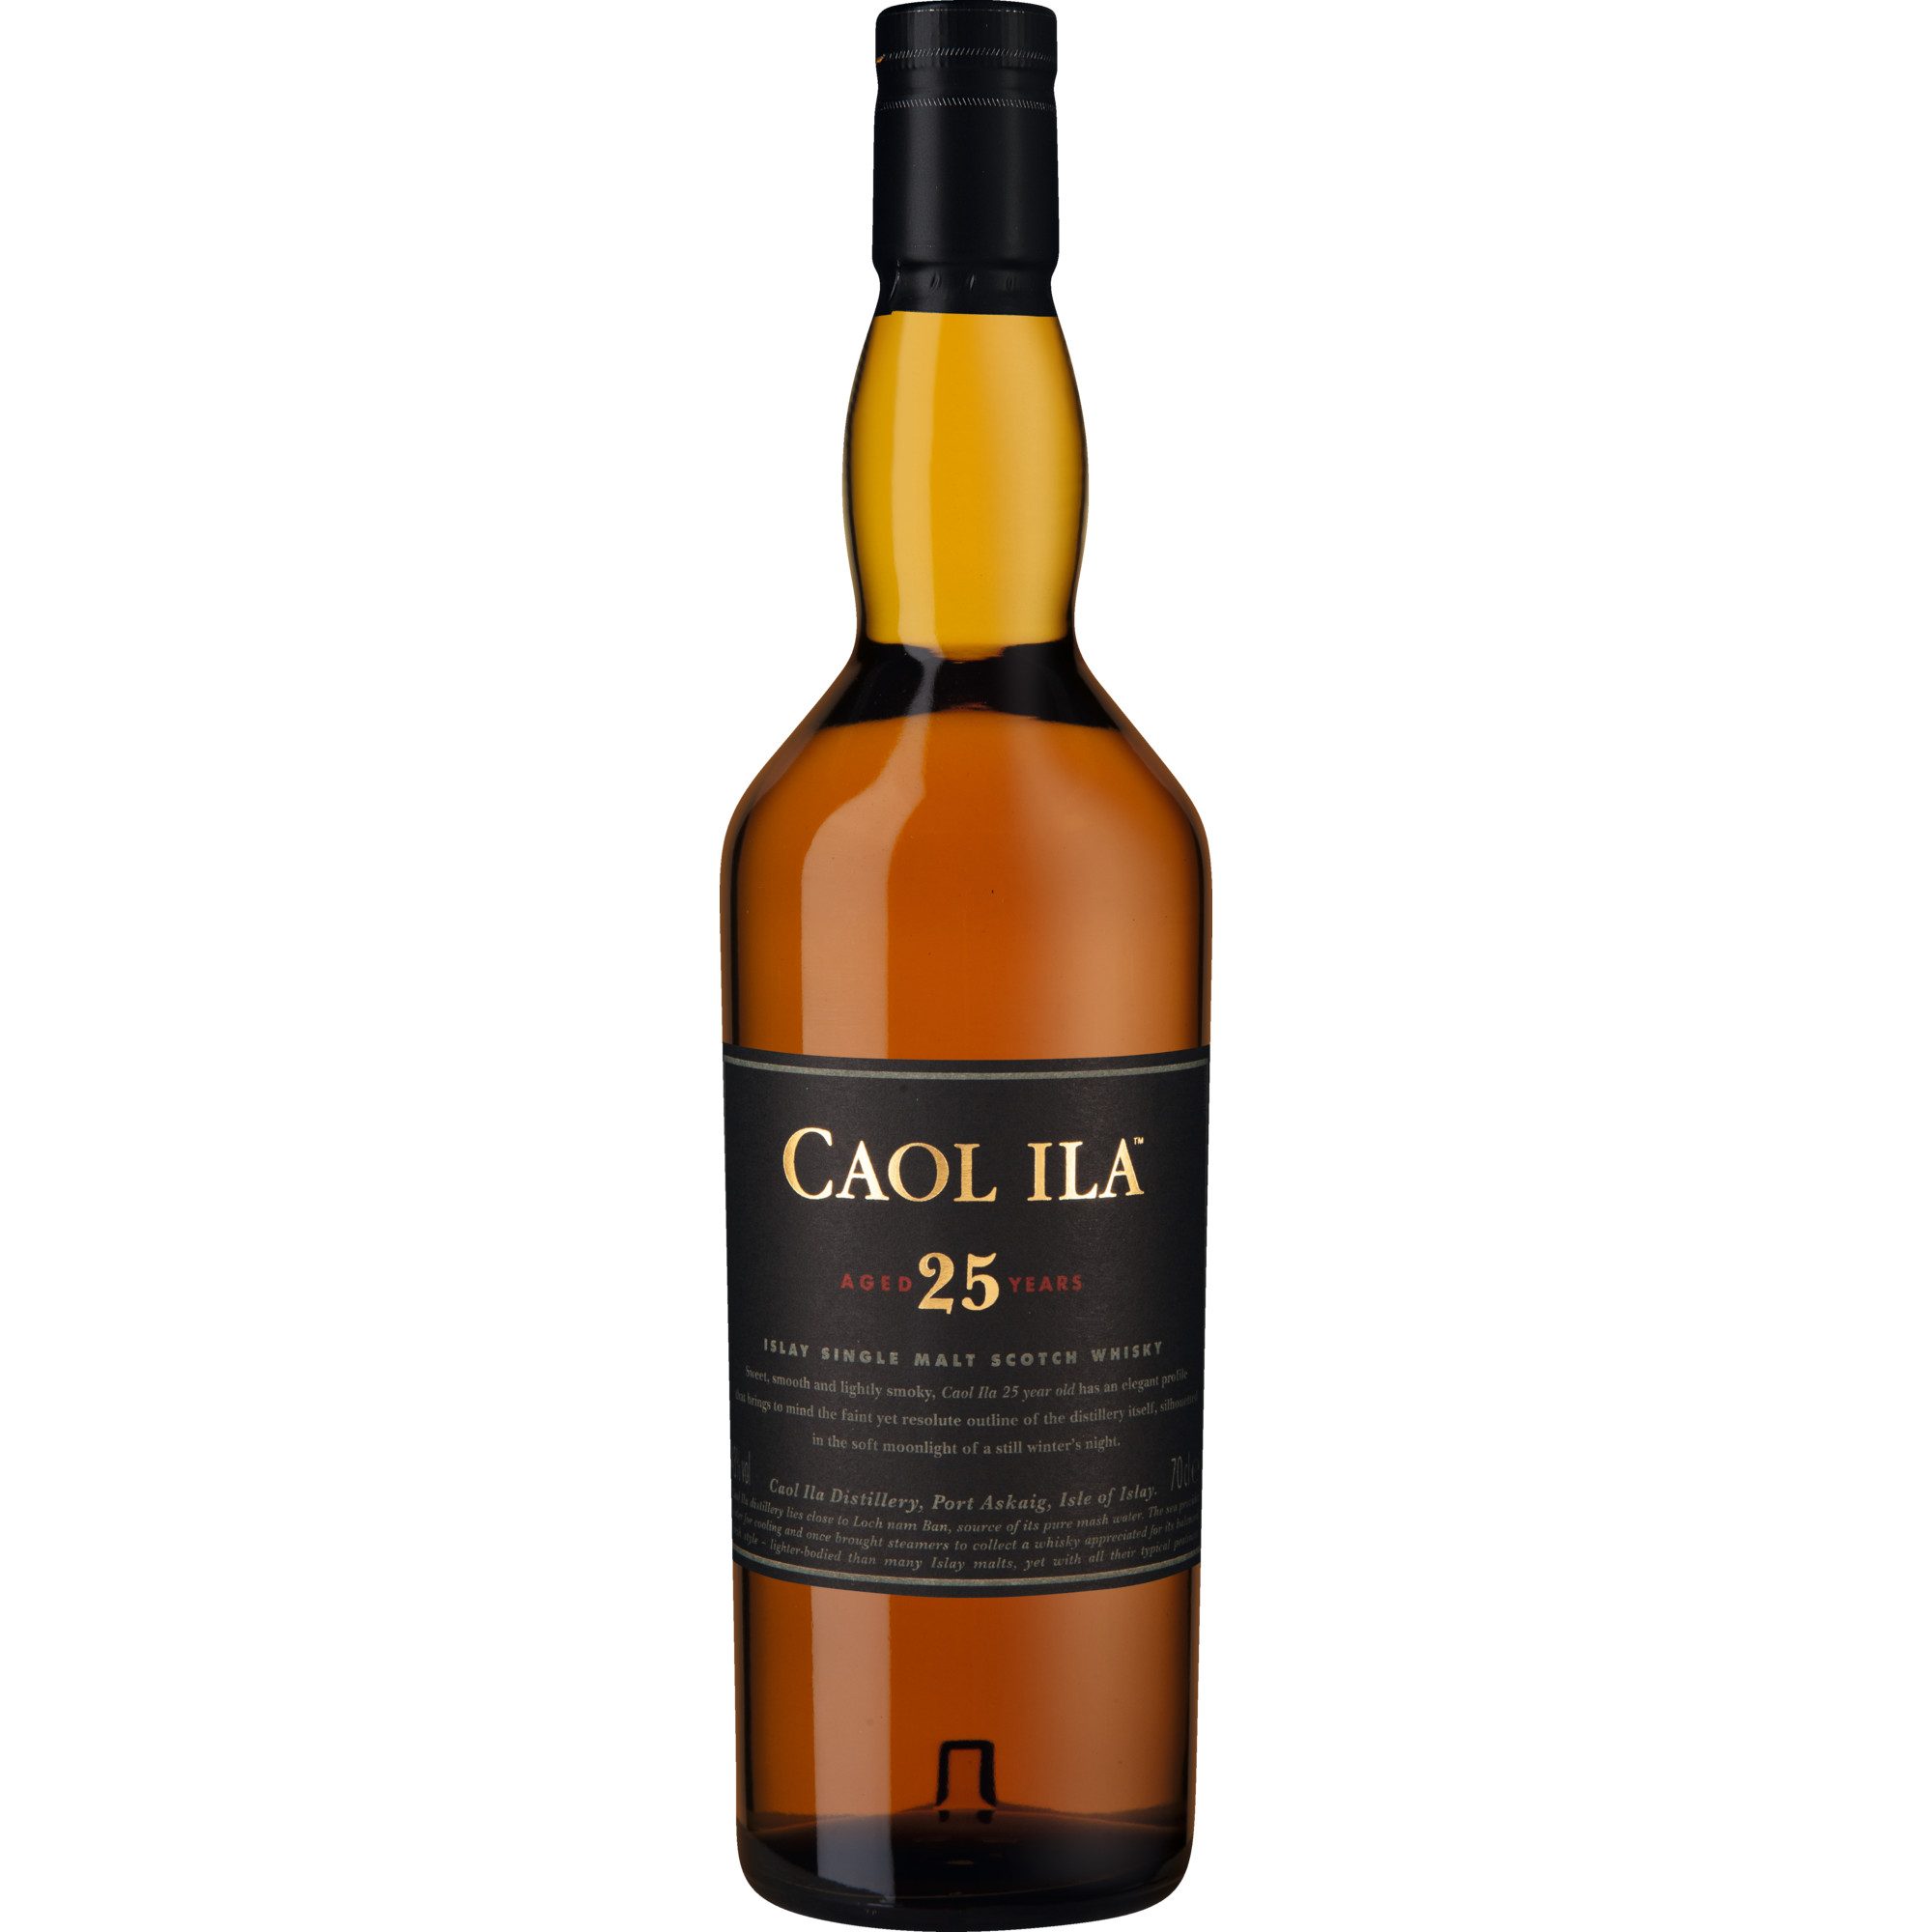 Image of Caol Ila 25 Years Isle of Islay Single Malt Whisky, Scotch, 0,7 L, 43% Vol., Schottland, Spirituosen